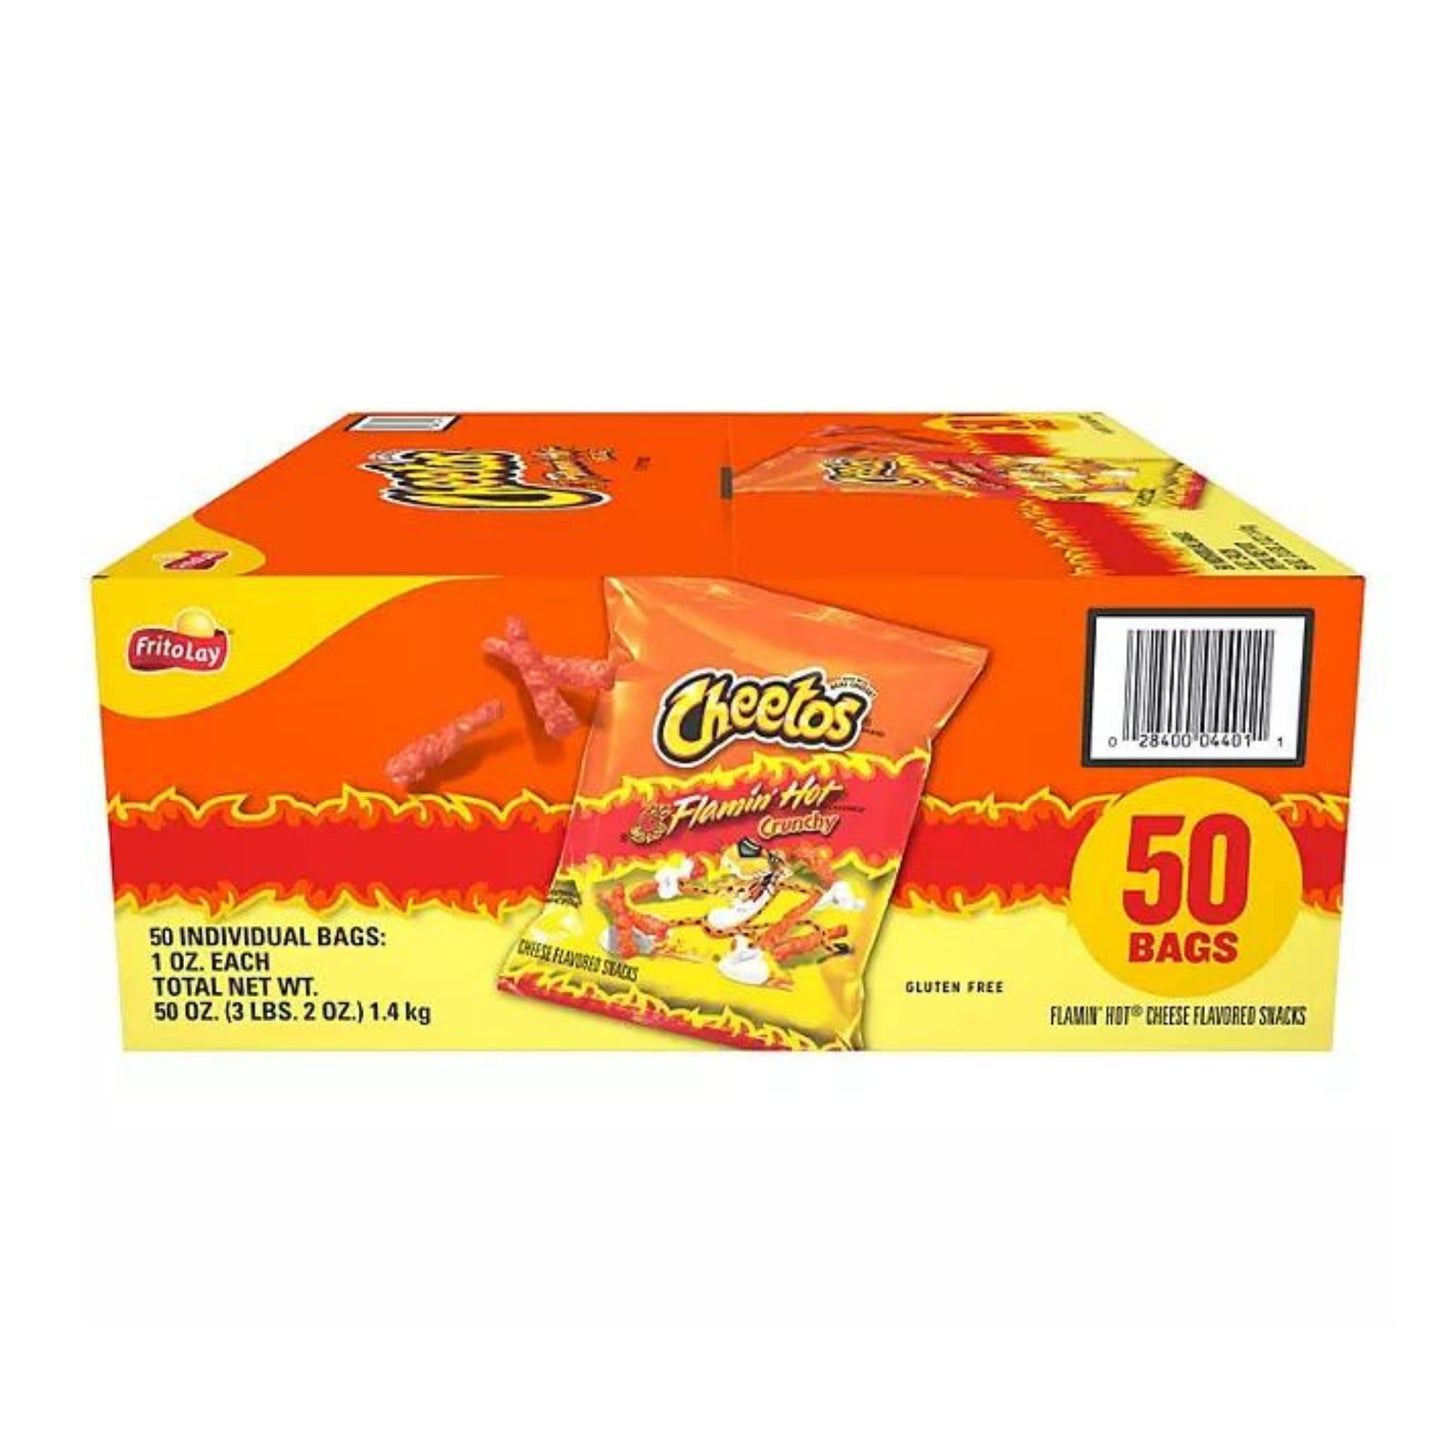 Cheetos Flamin' Hot Crunchy 1oz. 50bags per Pack